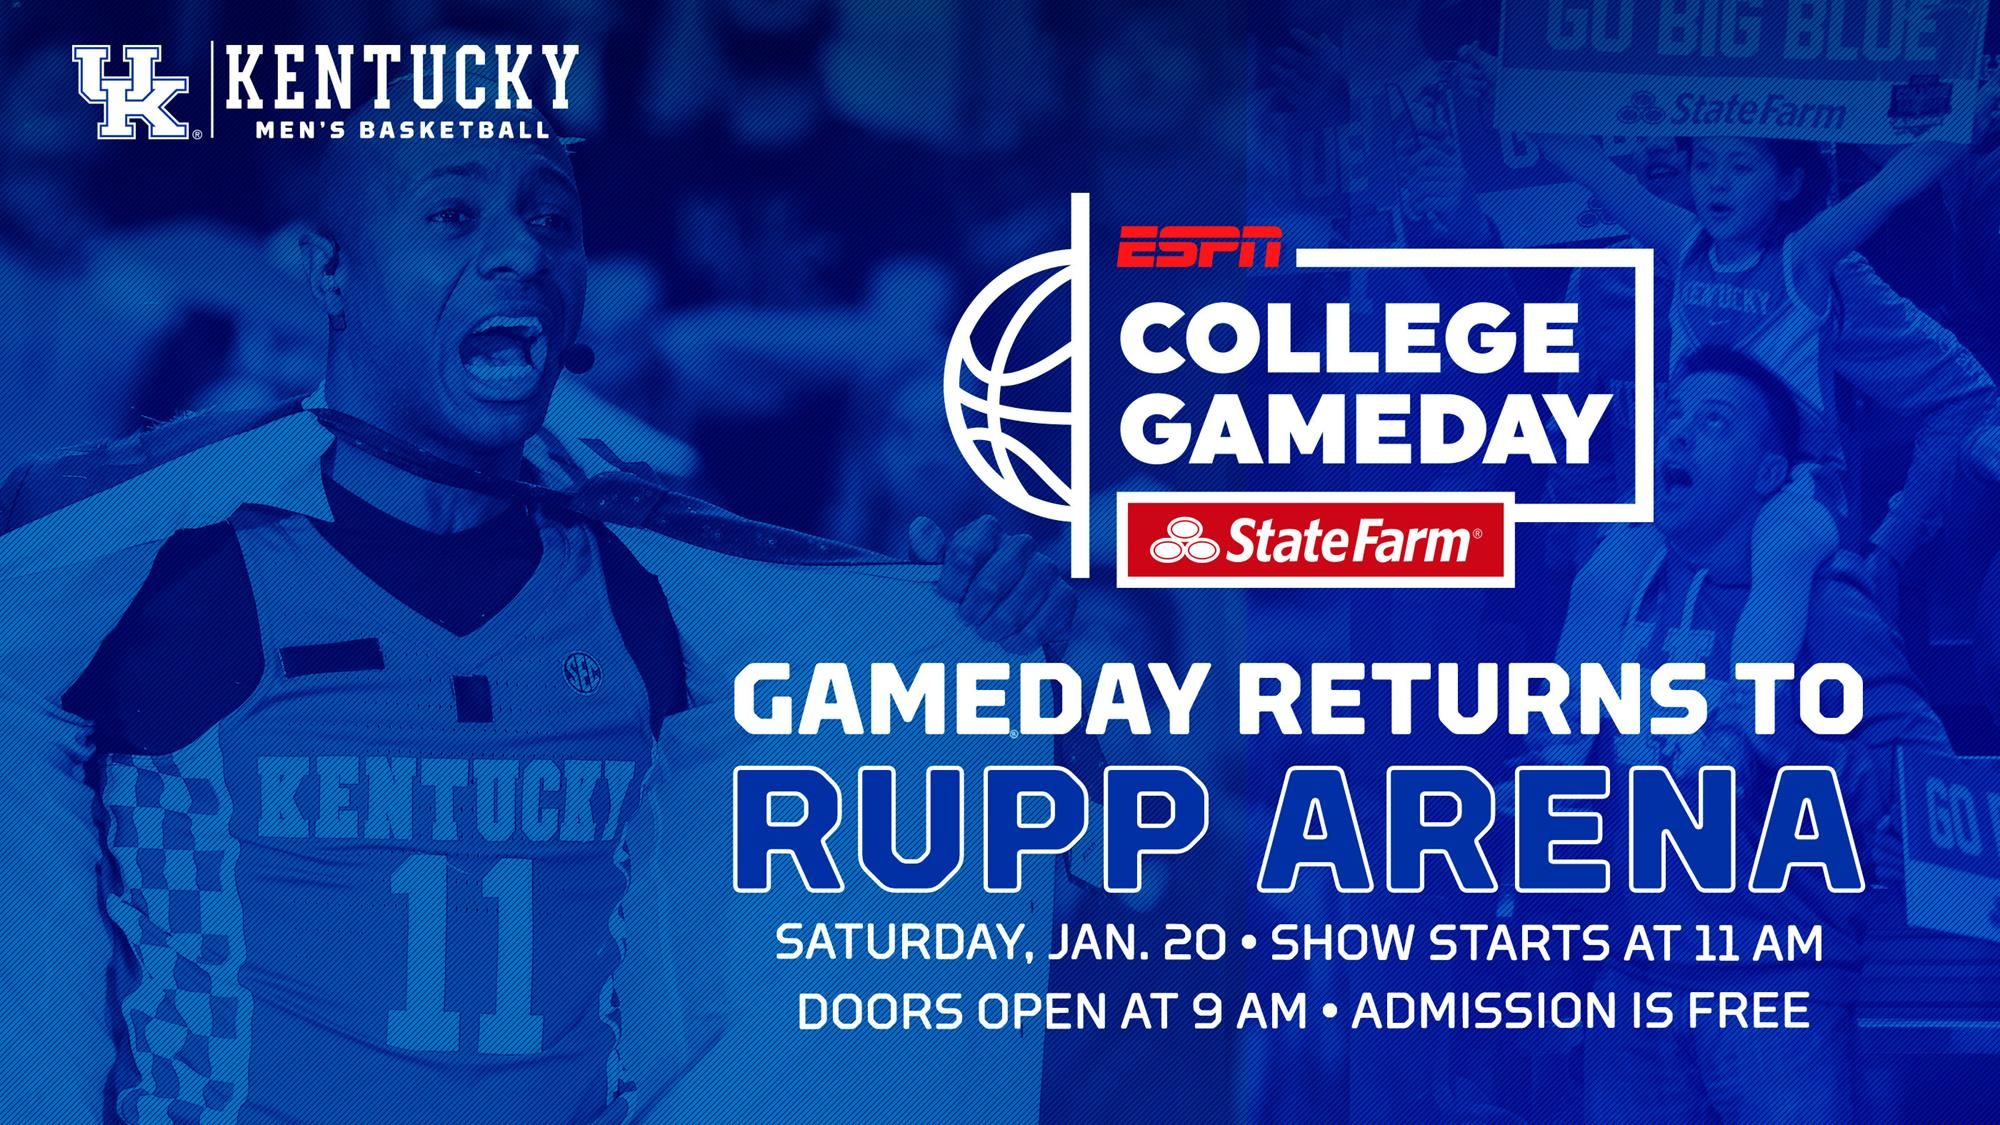 ESPN College GameDay Returns to Rupp Arena on Jan. 20